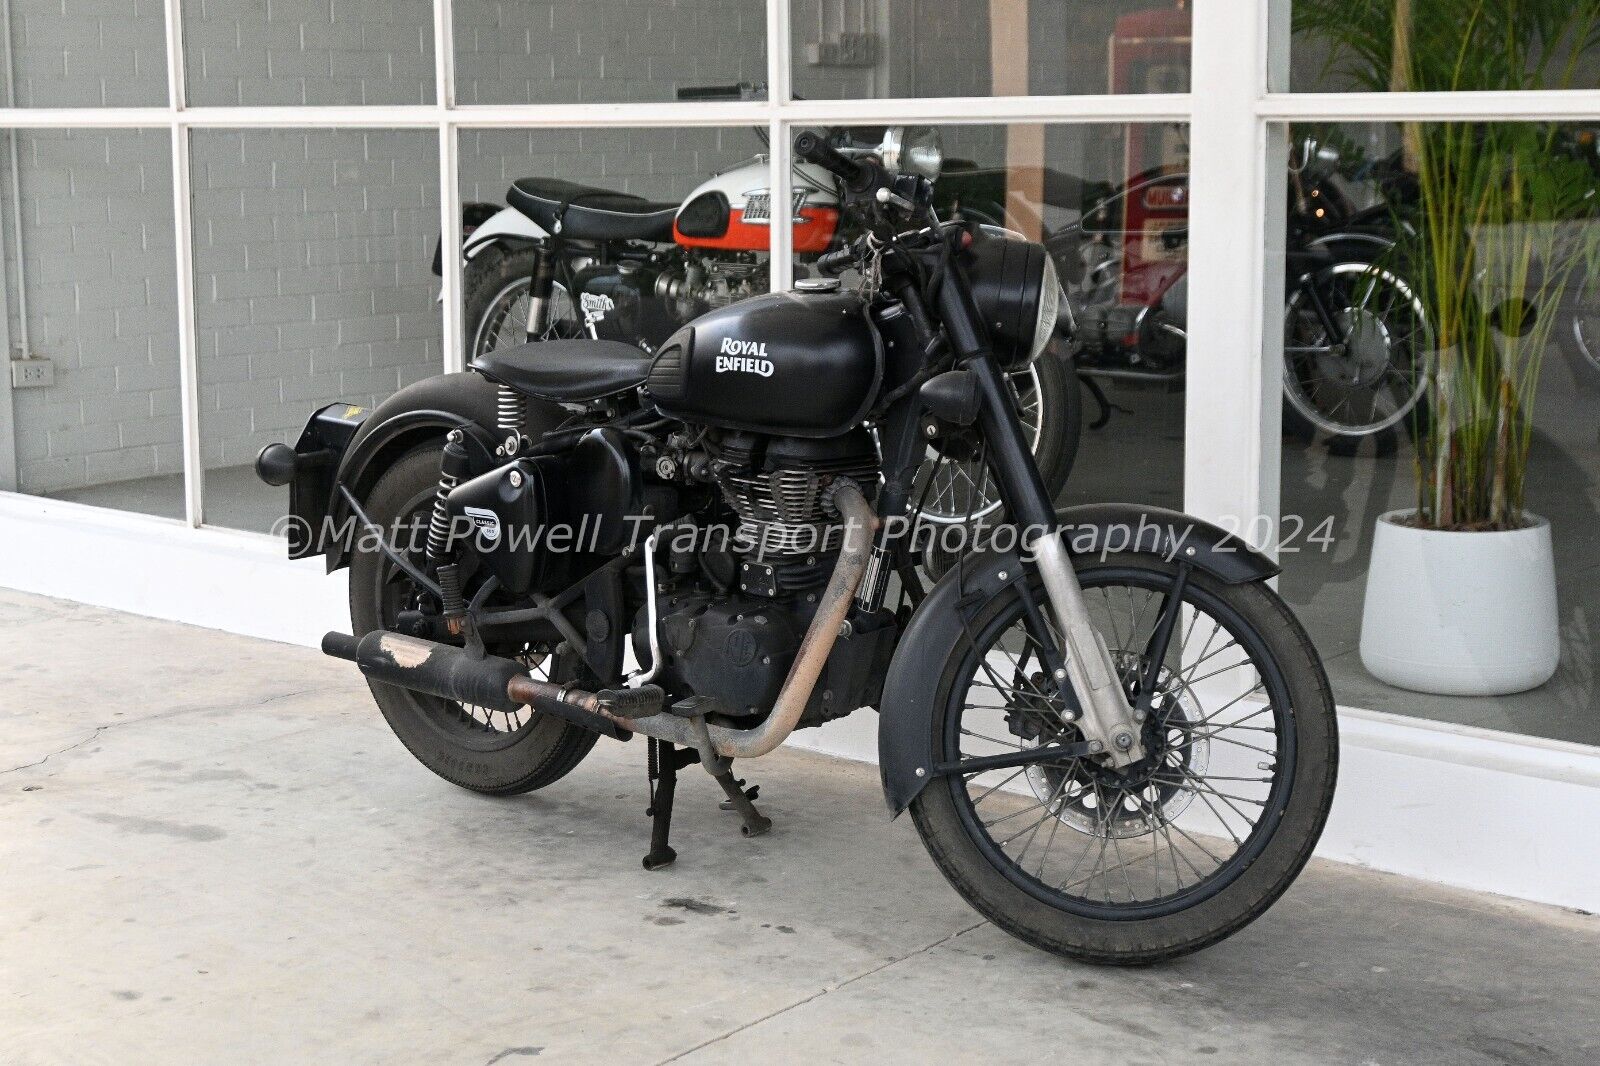 Motorcycle Photo 12x8 - Royal Enfield